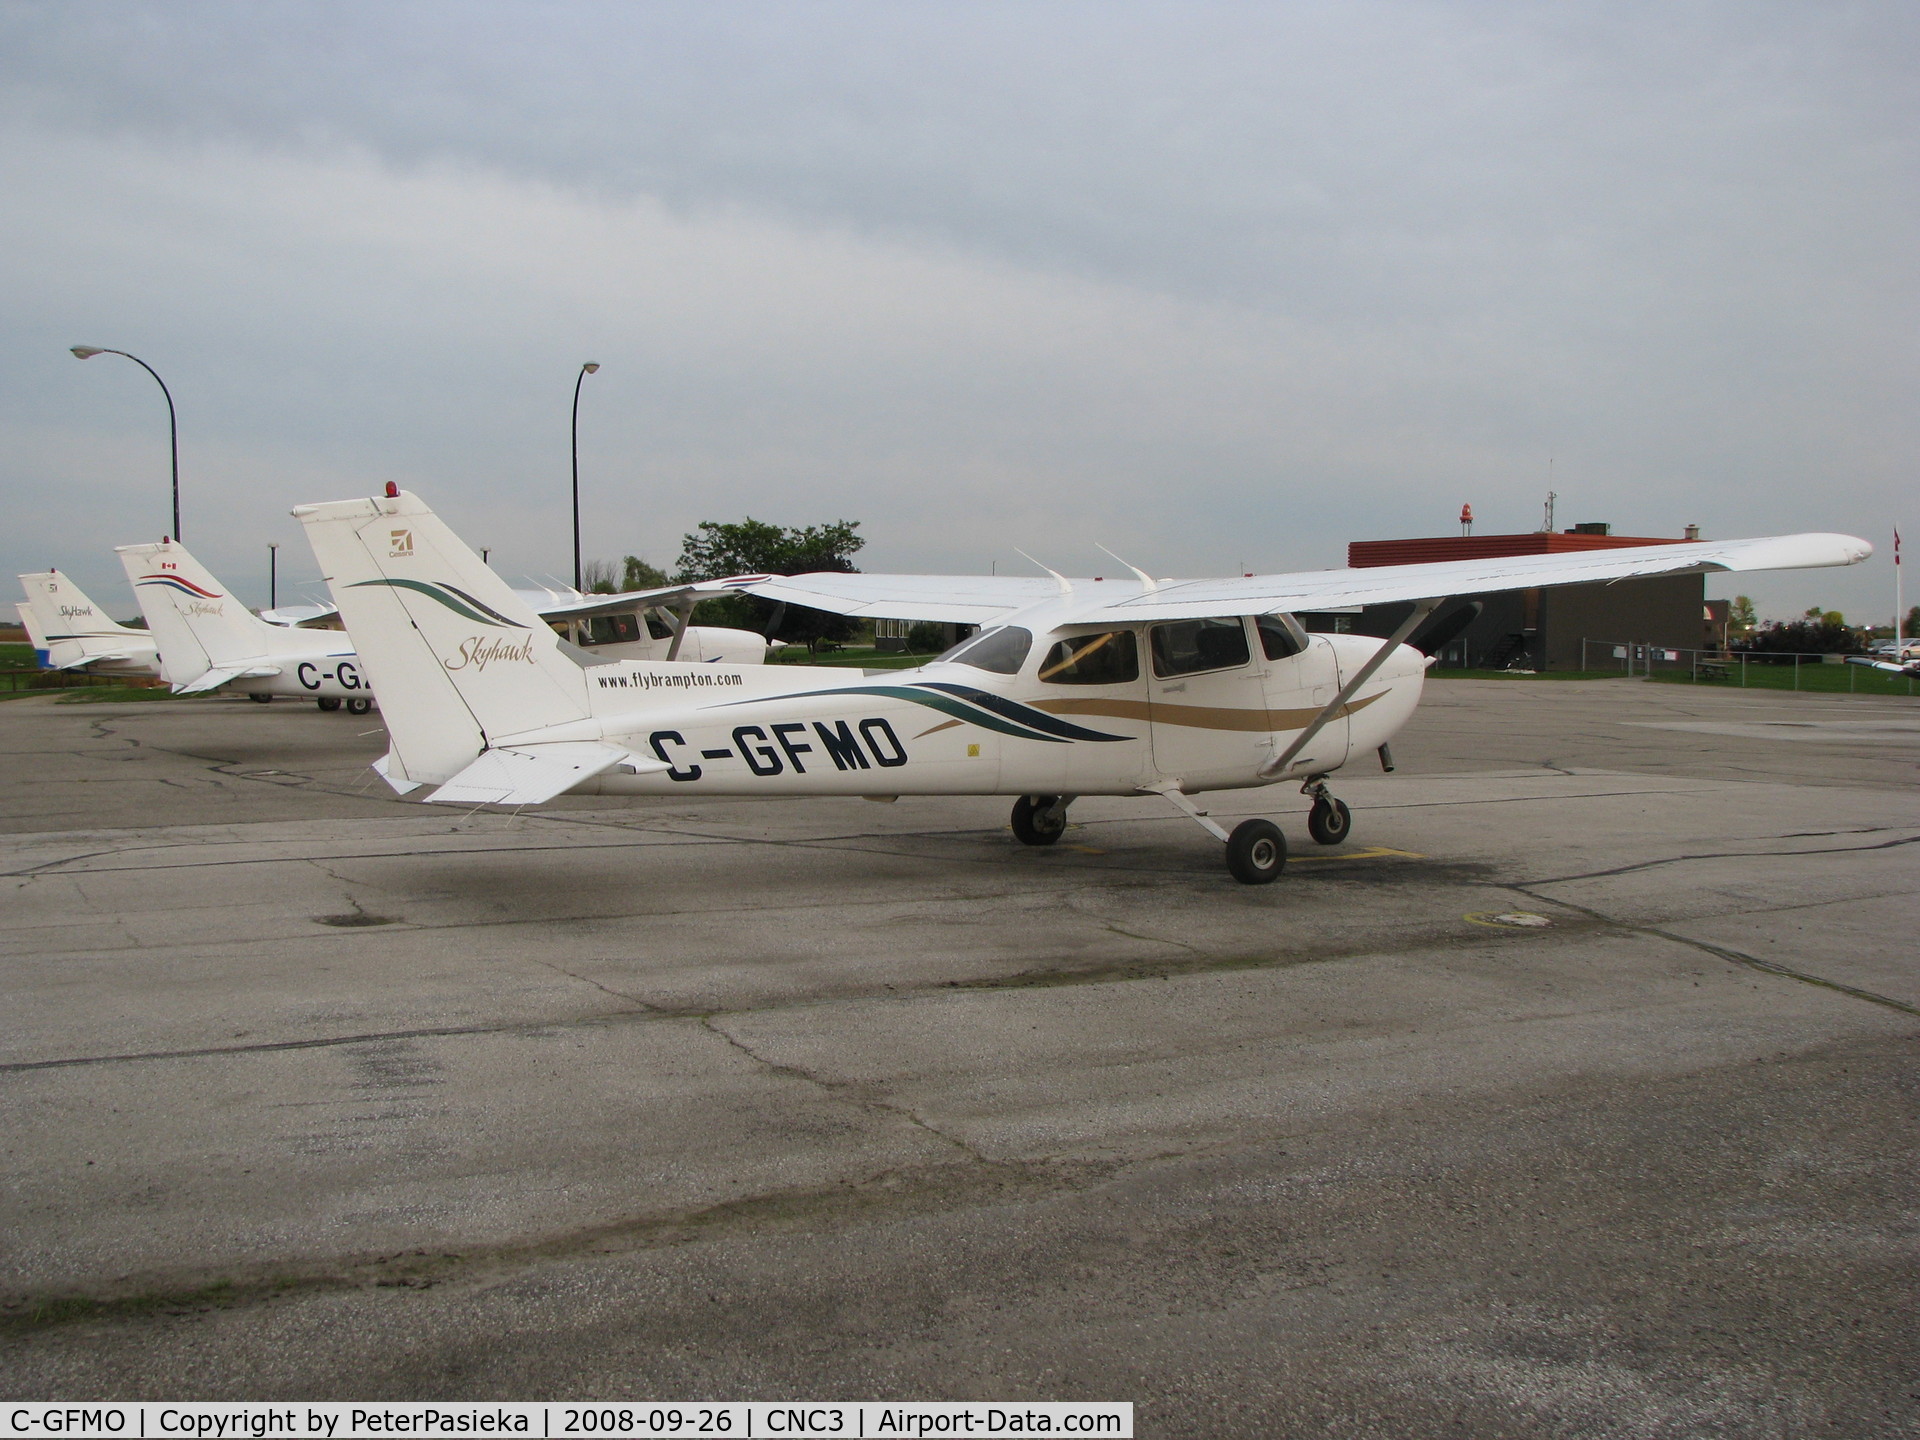 C-GFMO, 1999 Cessna 172R C/N 17280780, @ Brampton Airport, BFC training aircraft